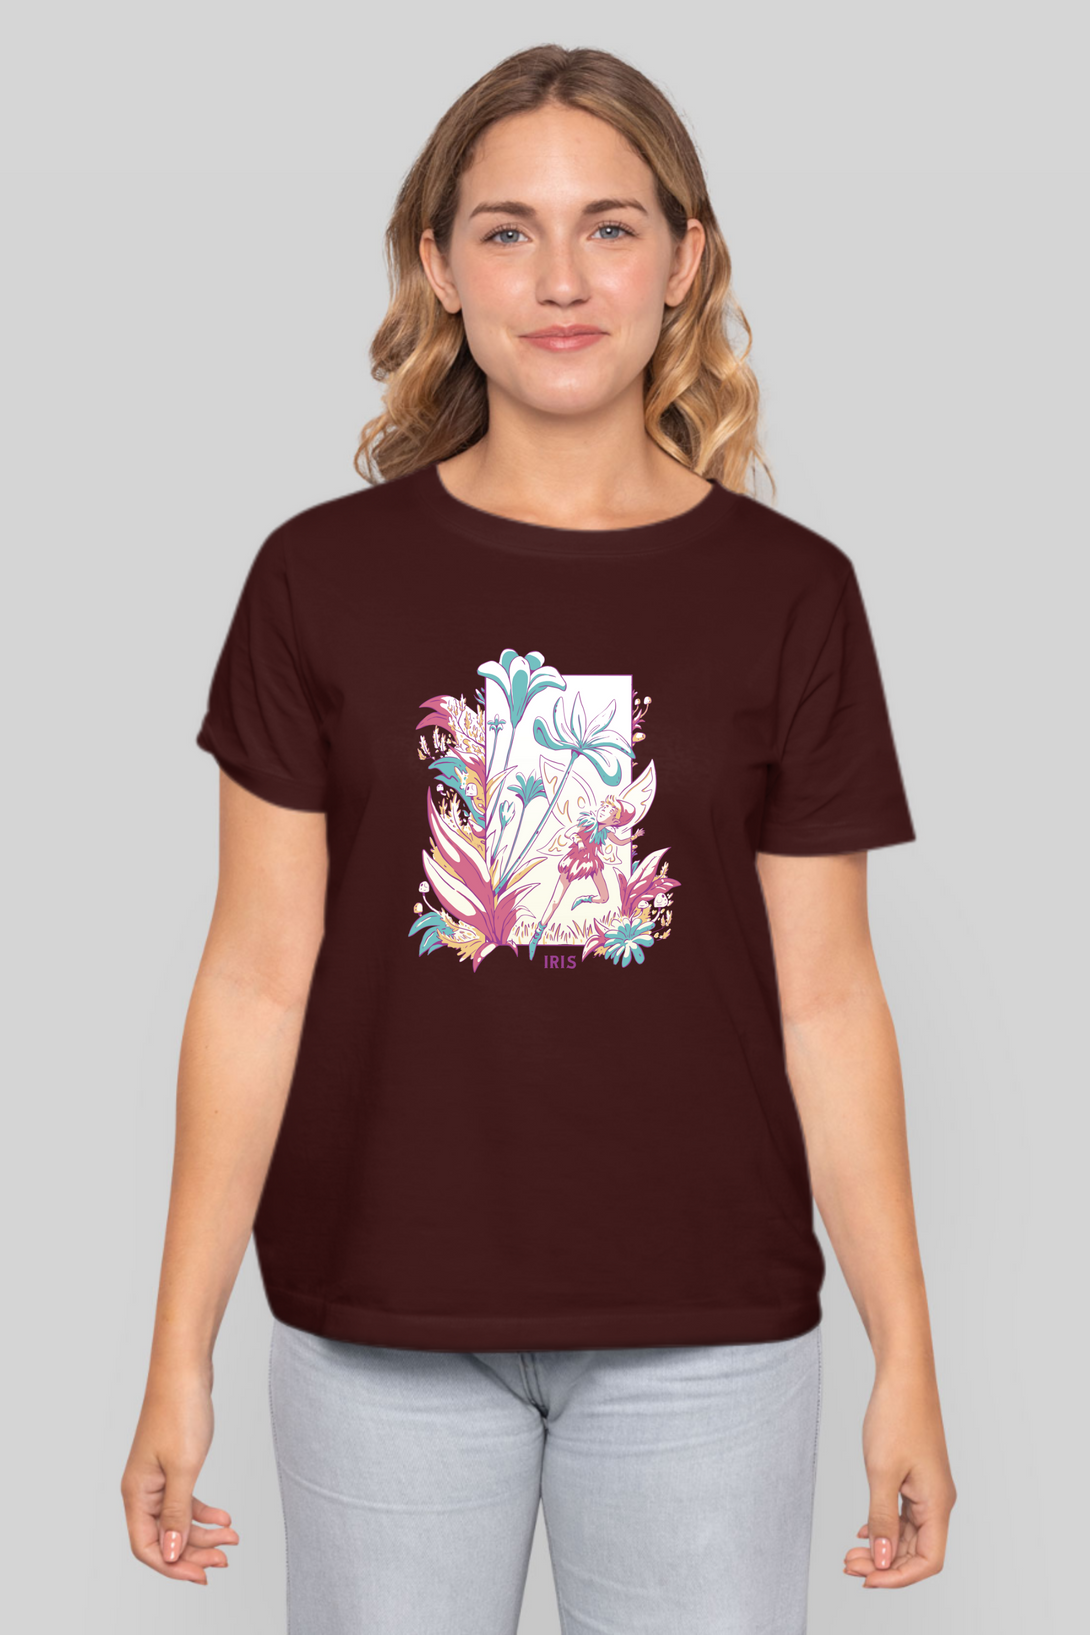 Fairy Blossom Printed T-Shirt For Women - WowWaves - 11